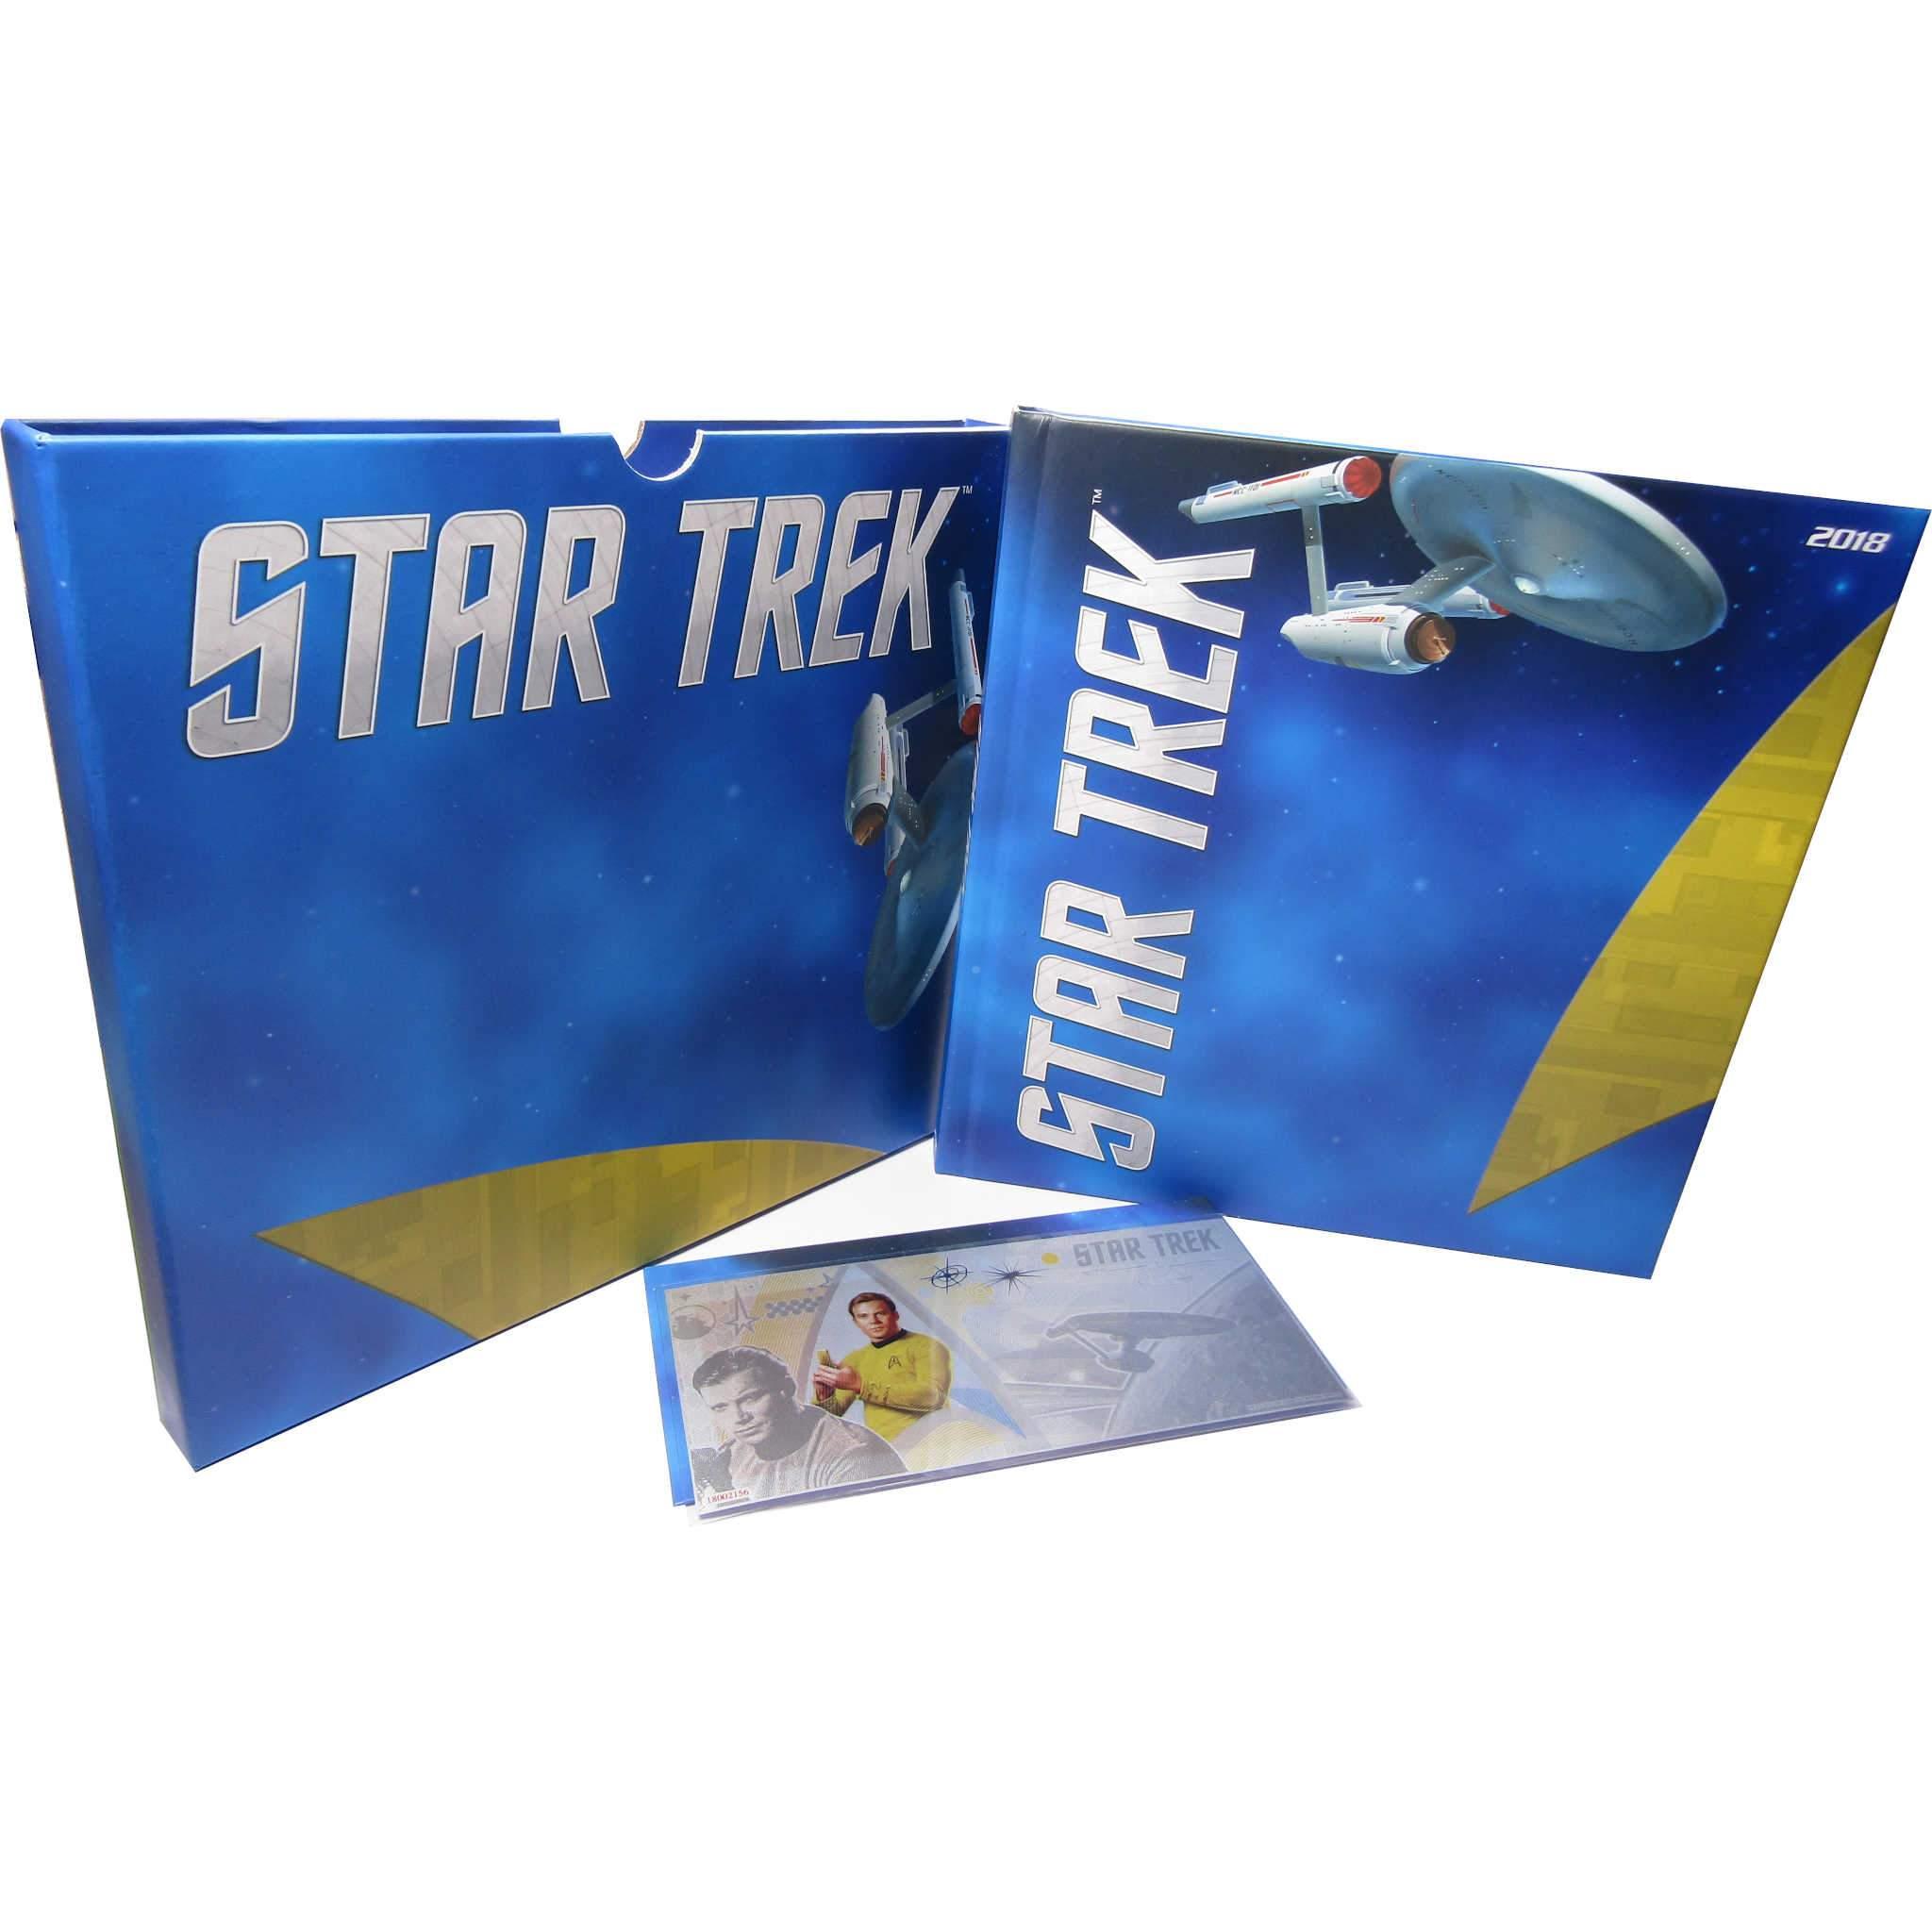 Star Trek Original Series Kirk 5g .999 Silver $1 Coin Note w/ Album 2018 Niue